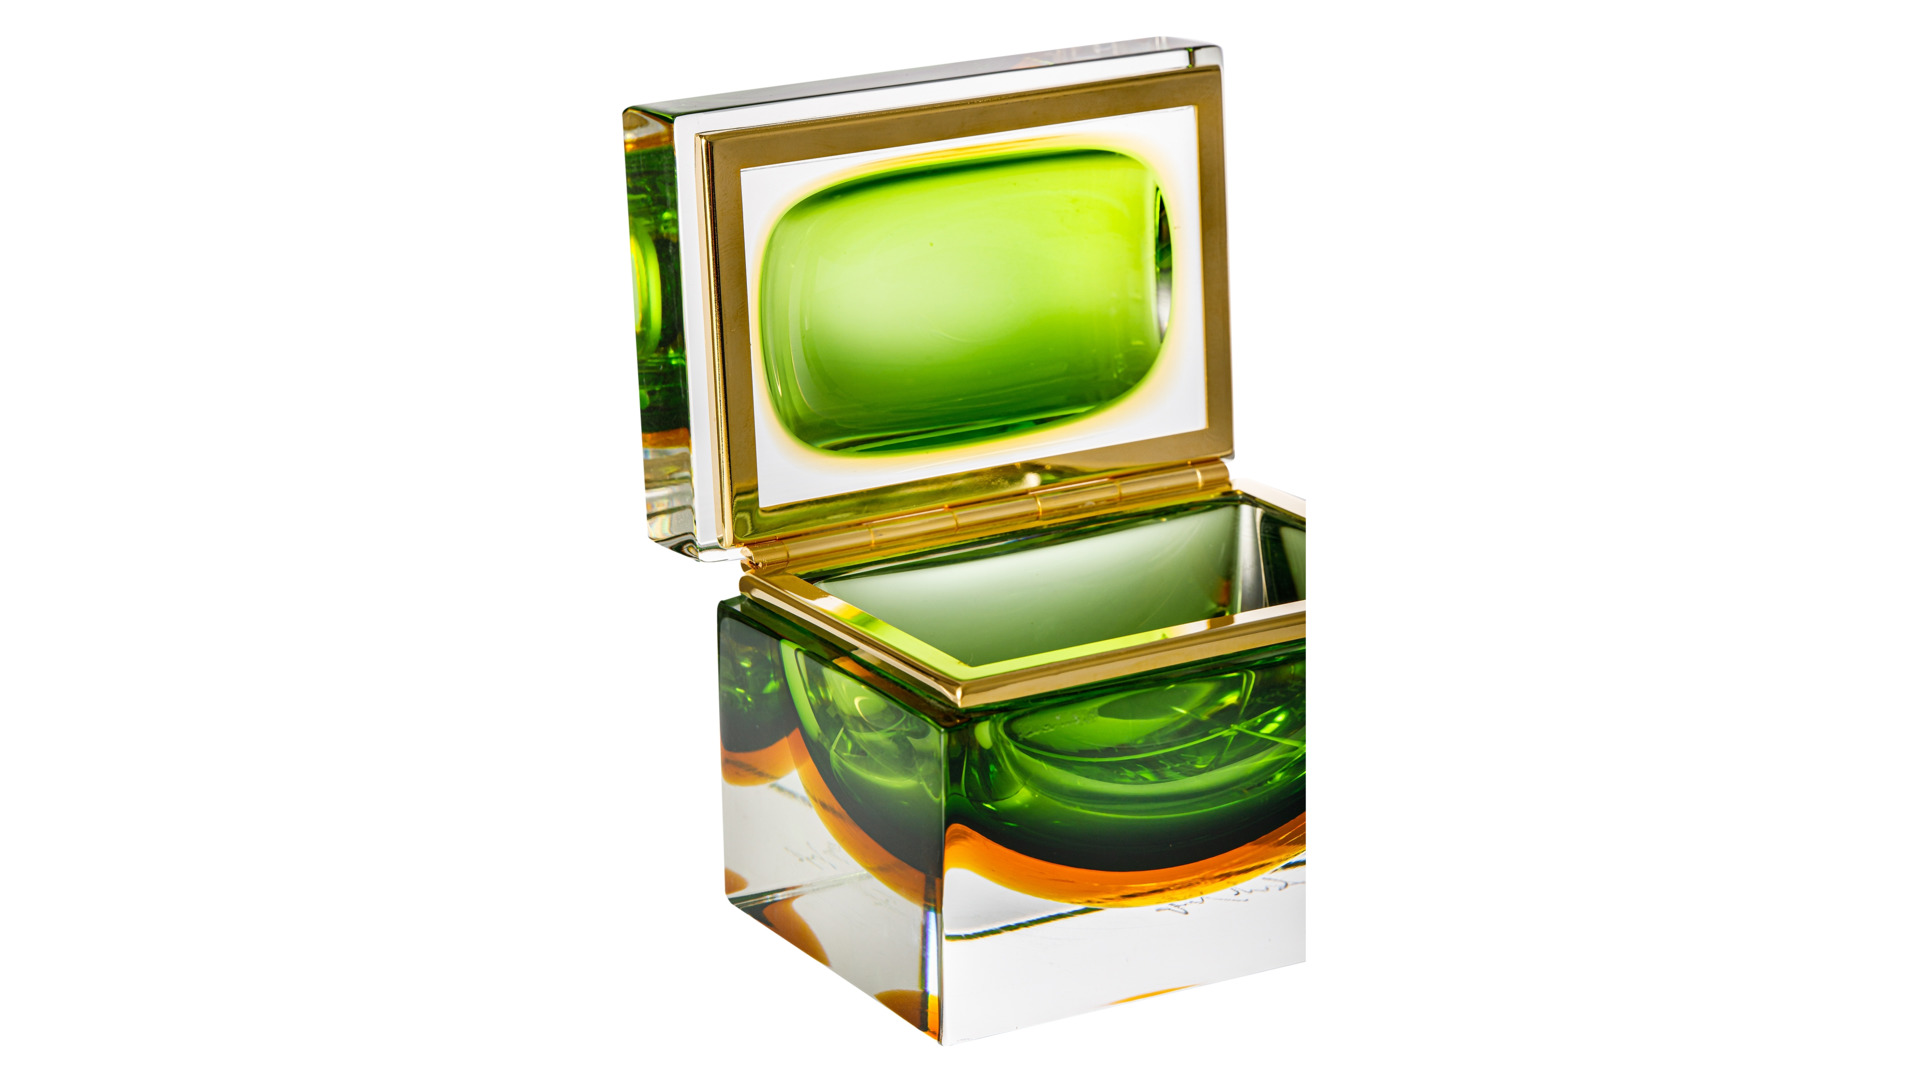 Шкатулка для украшений Alessandro Mandruzzato 13х8х11 см, стекло муранское, золото, зеленая